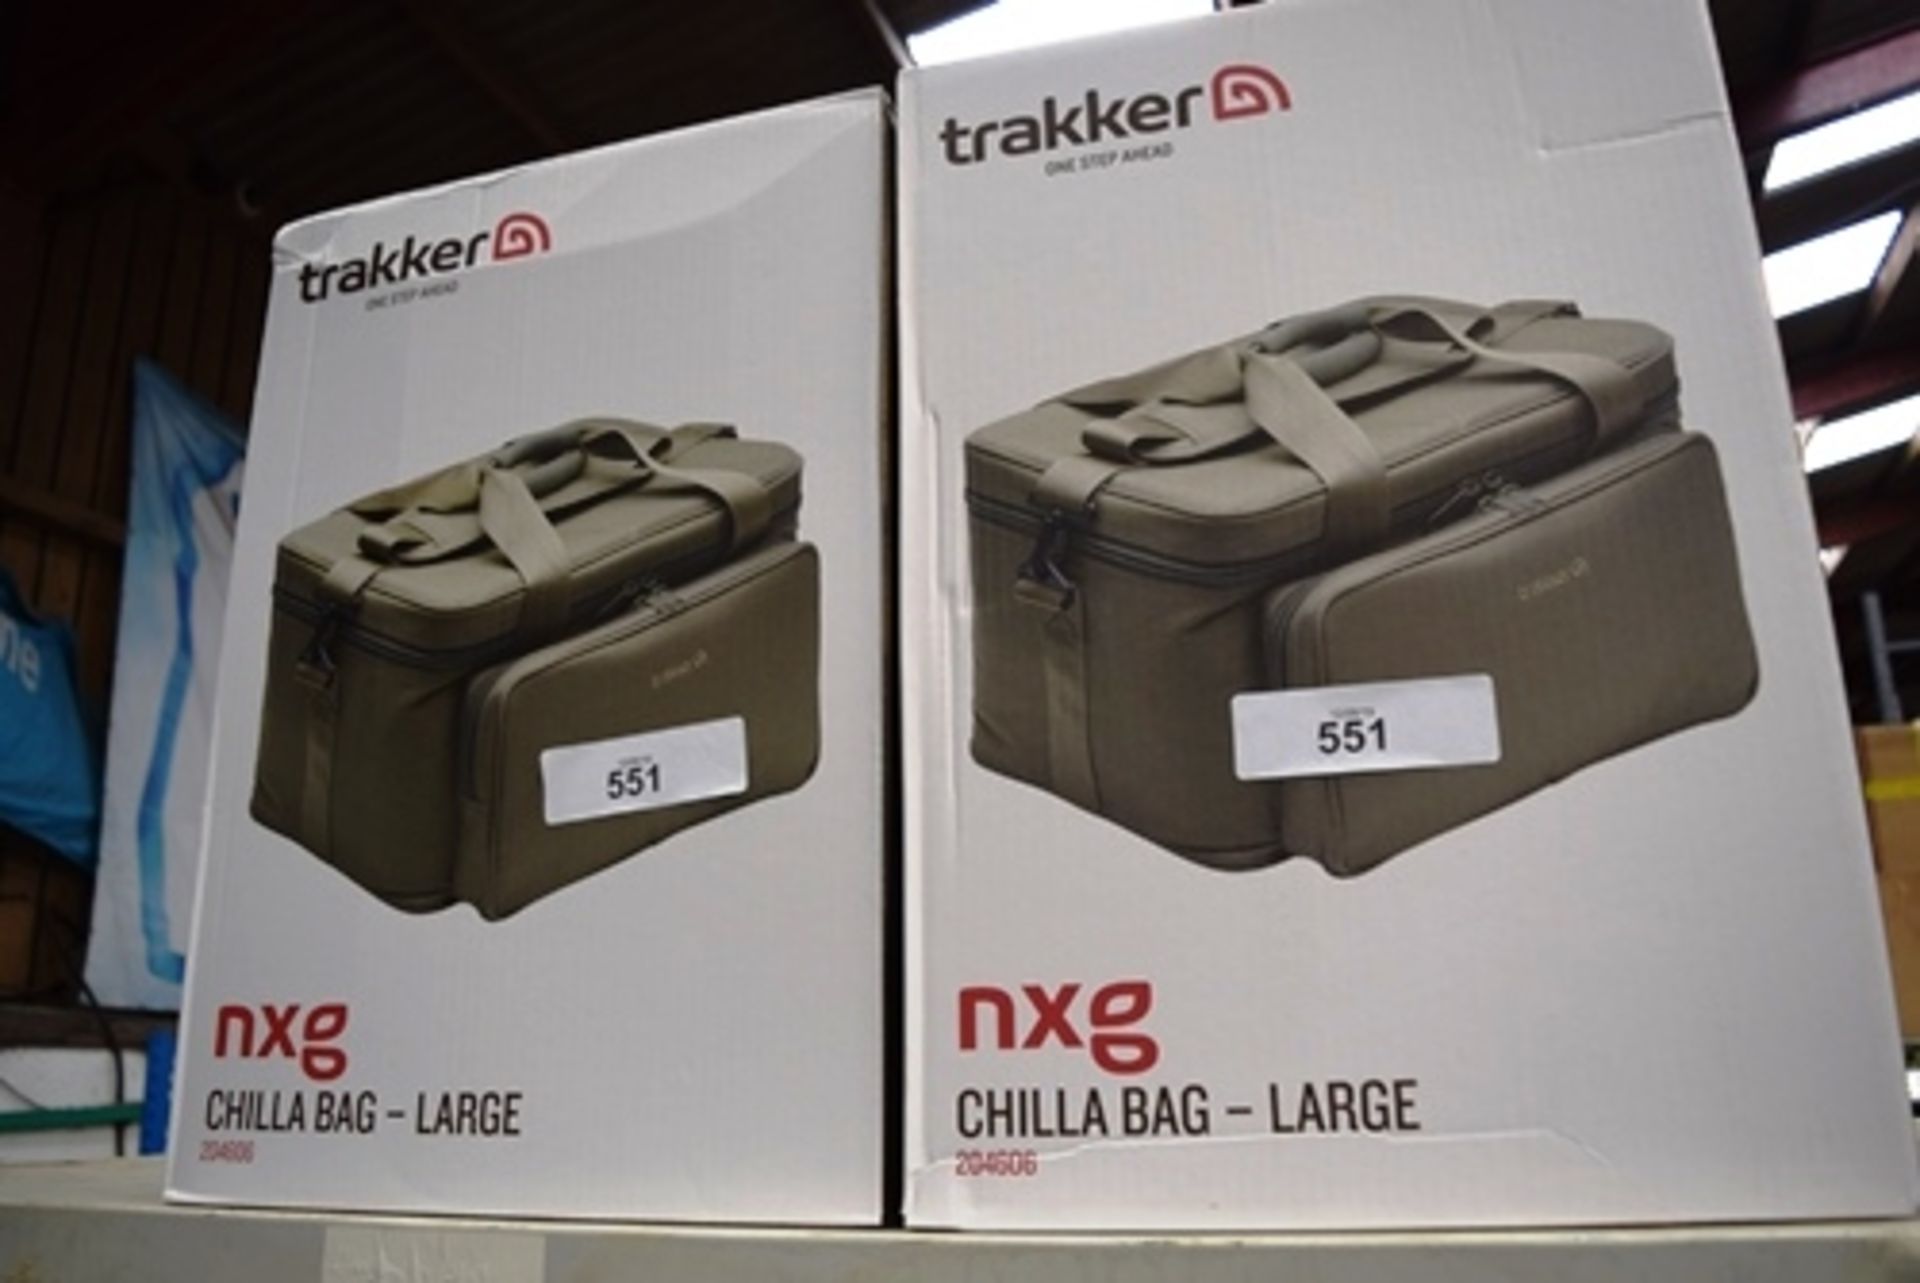 2 x Trakker NXG large Chila bag, code 204606 - ~new in box (esb16)